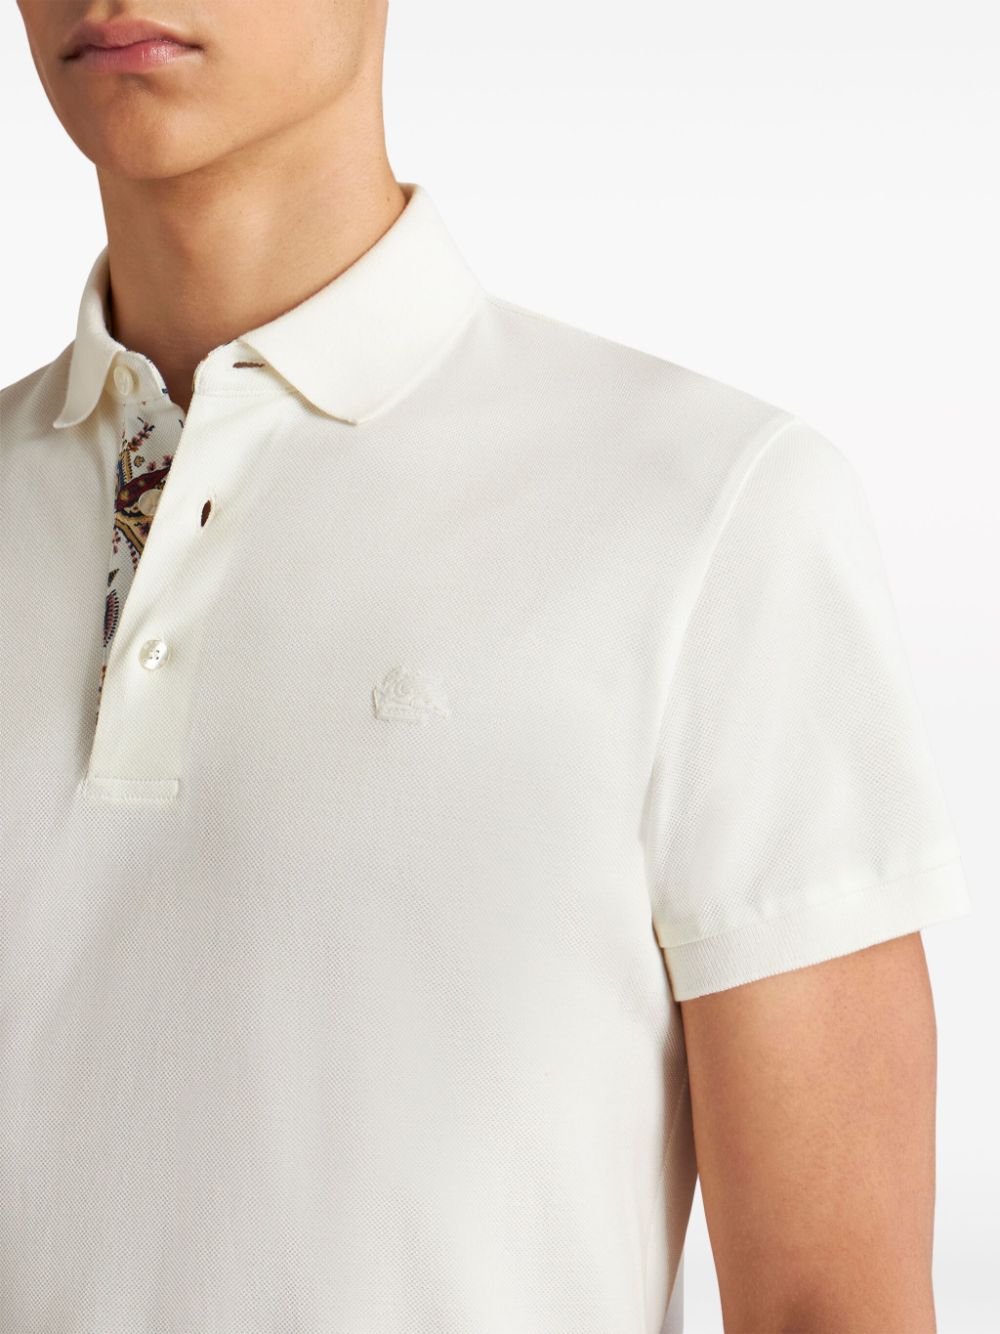 White polo shirt